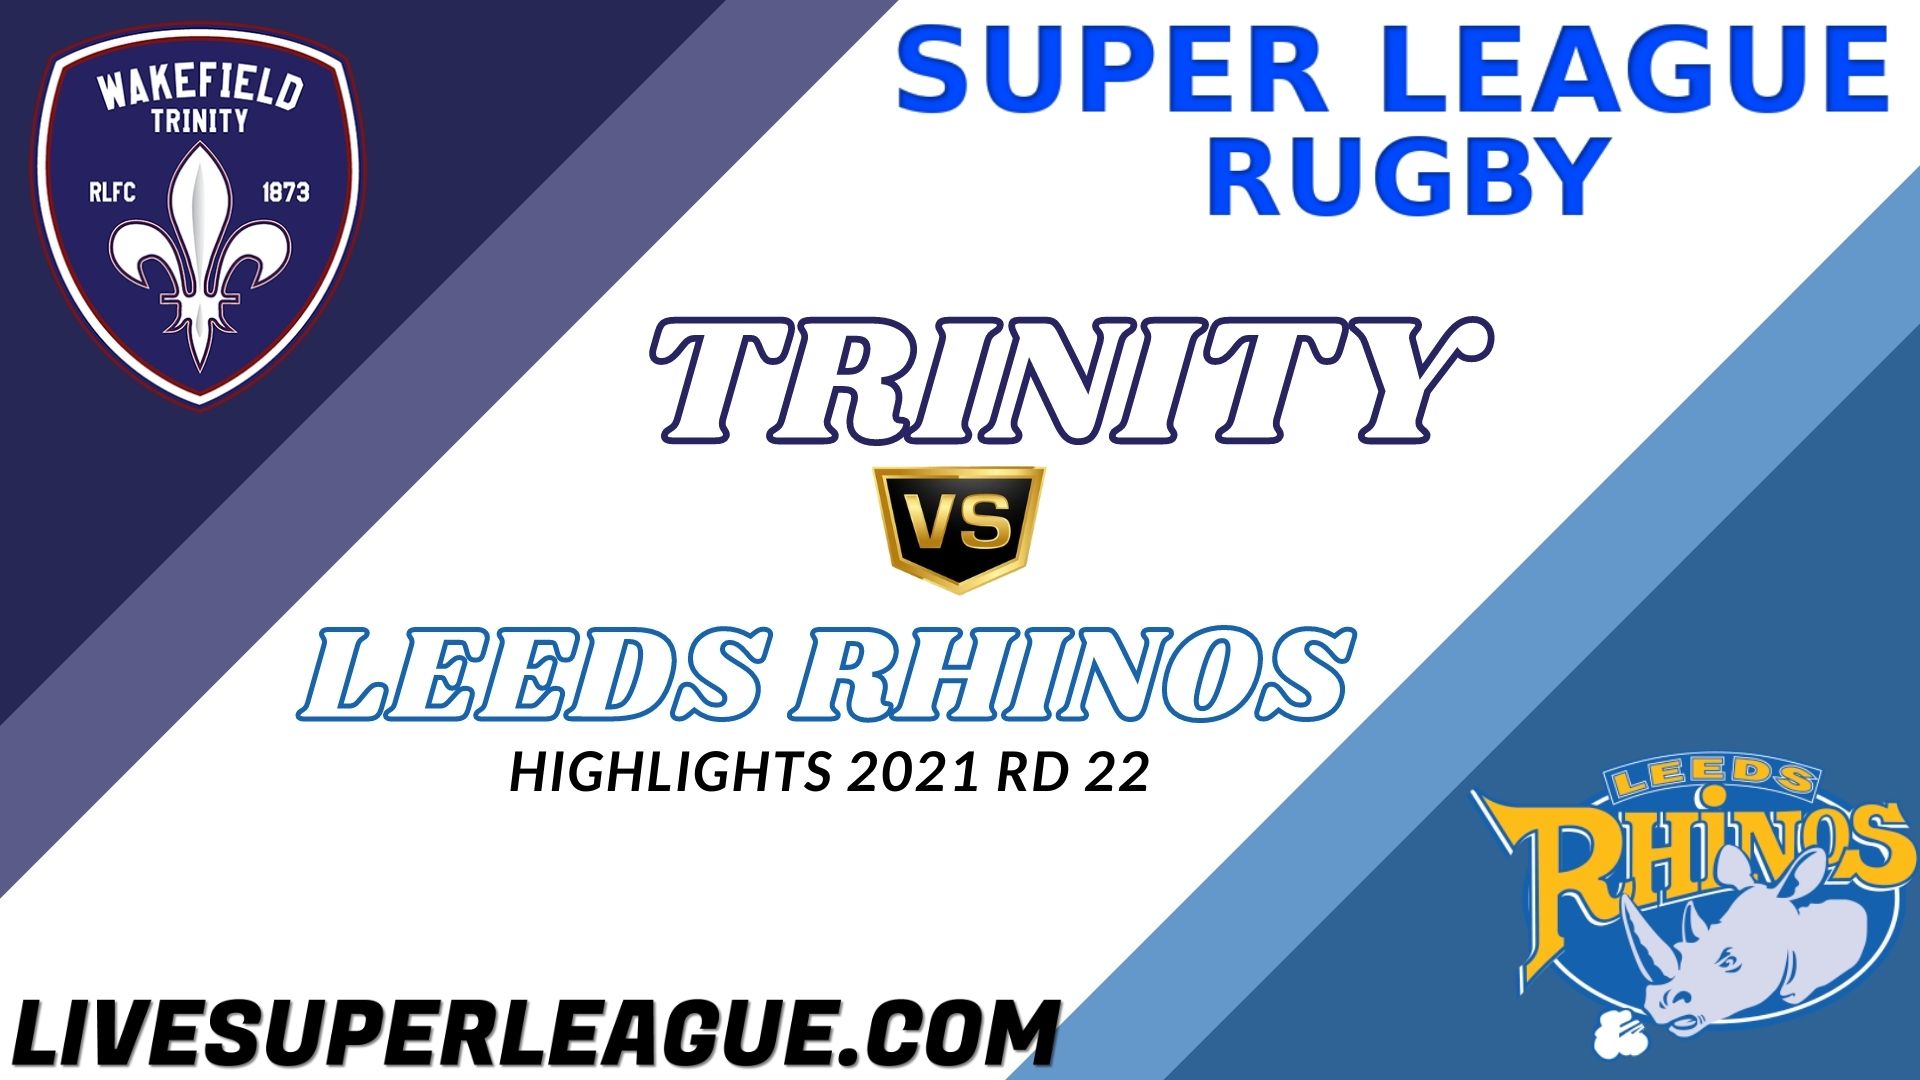 Wakefield Trinity Vs Leeds Rhinos Highlights 2021